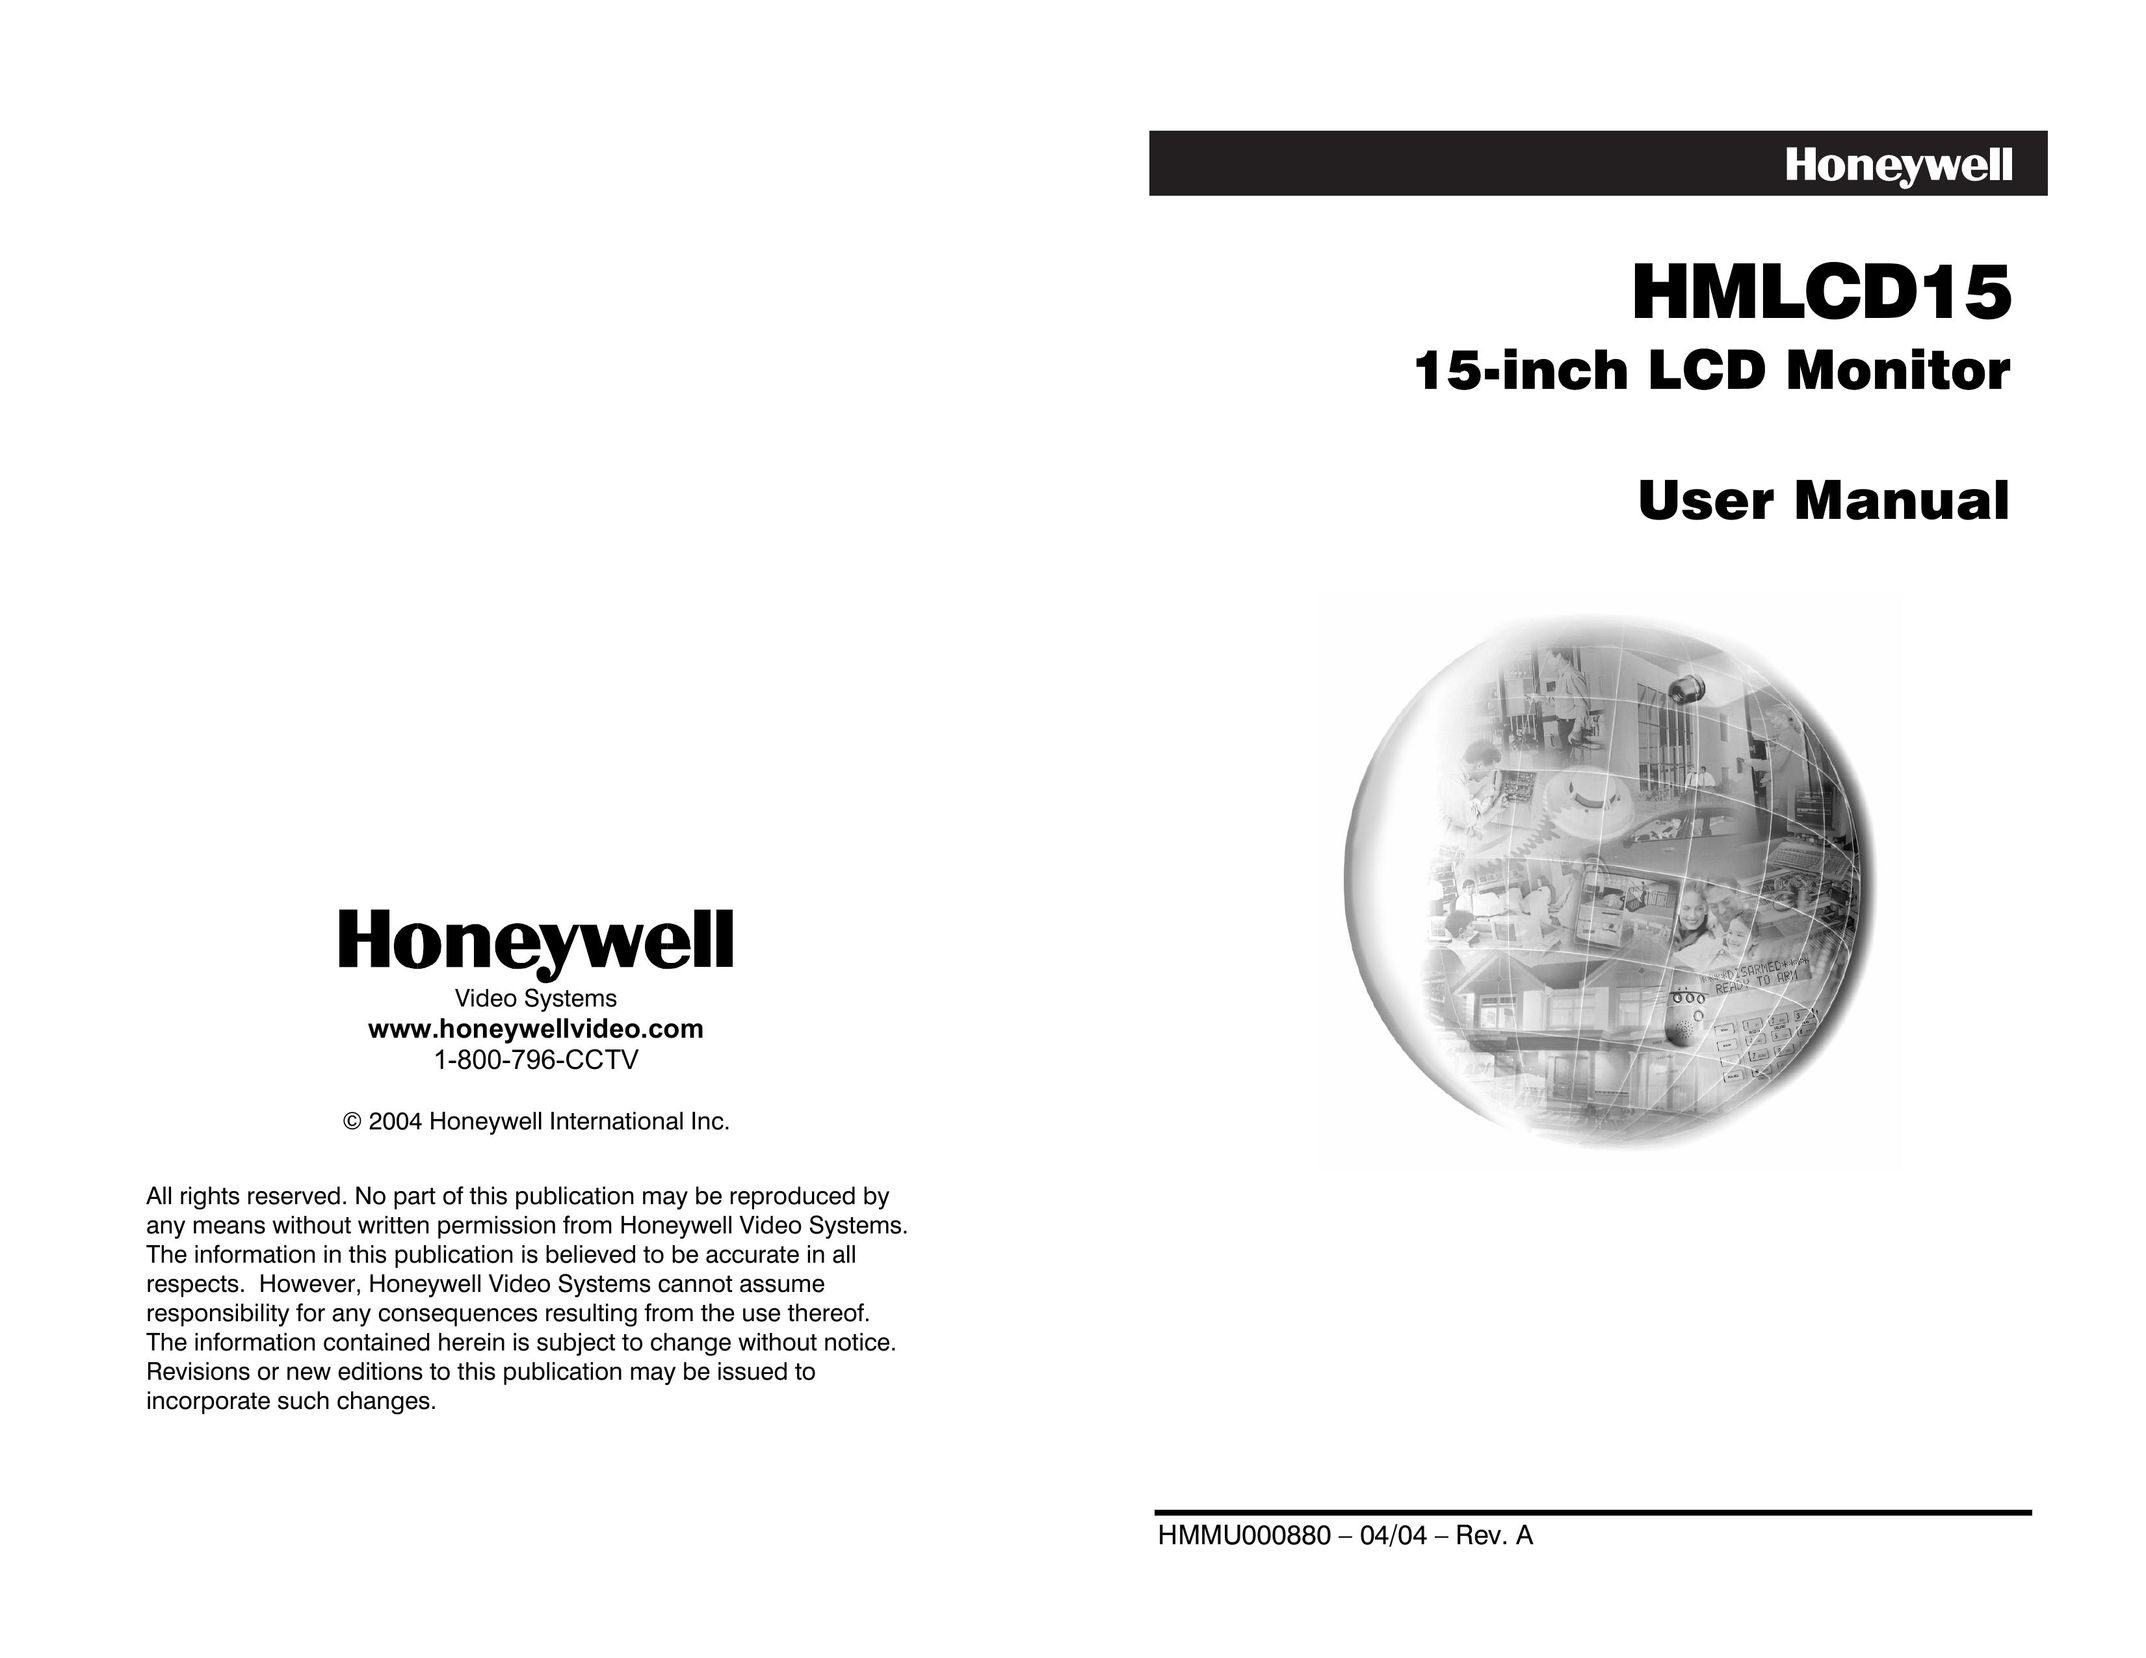 Honeywell HMLCD15 Car Video System User Manual